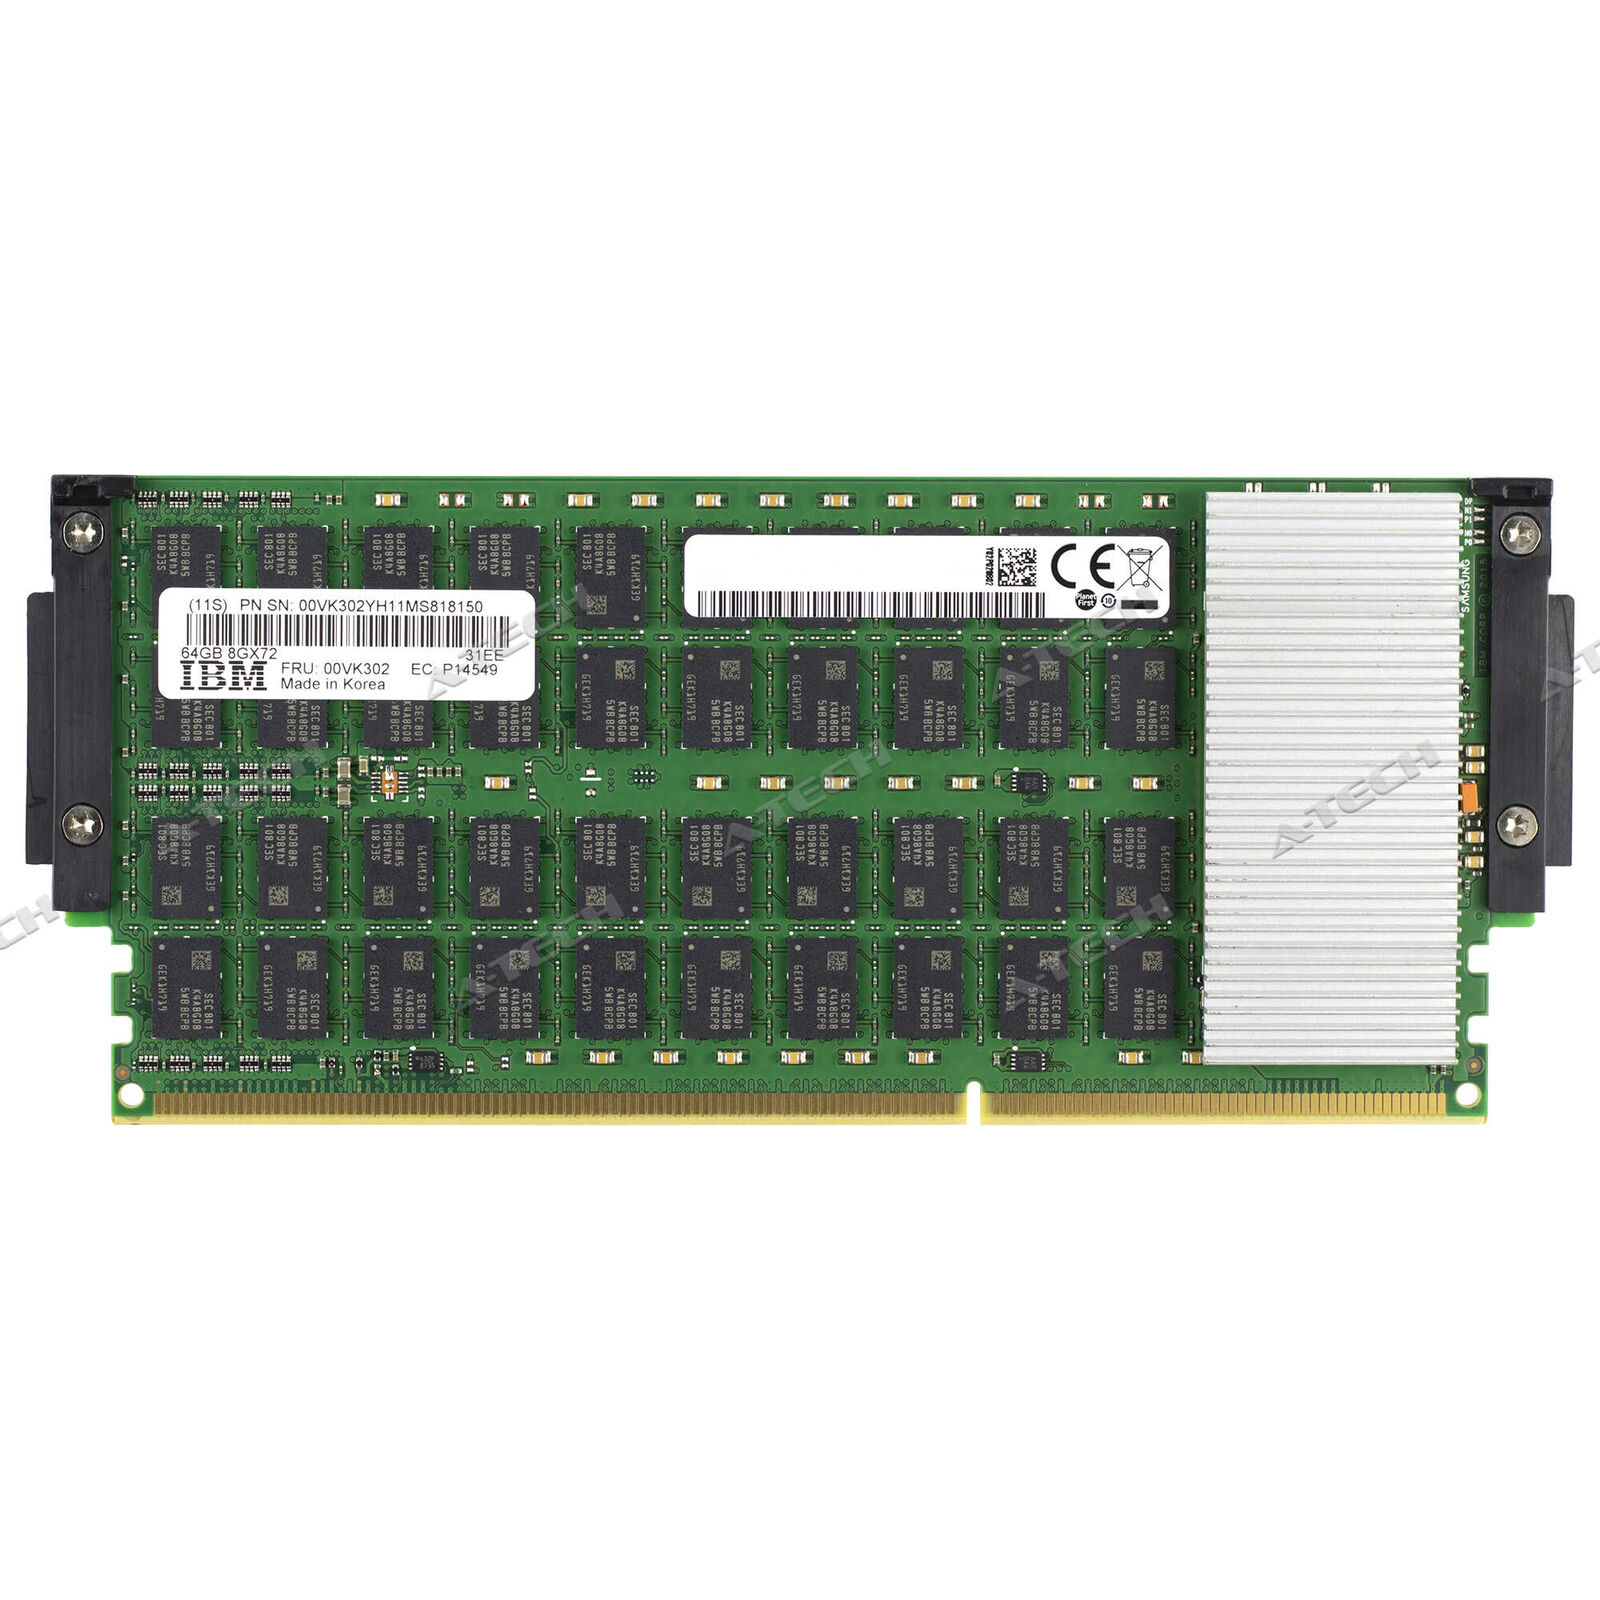 IBM-Lenovo 00VK302 31EE 64GB DDR4 CDIMM 8Gx72 Cartridge Power Server Memory RAM